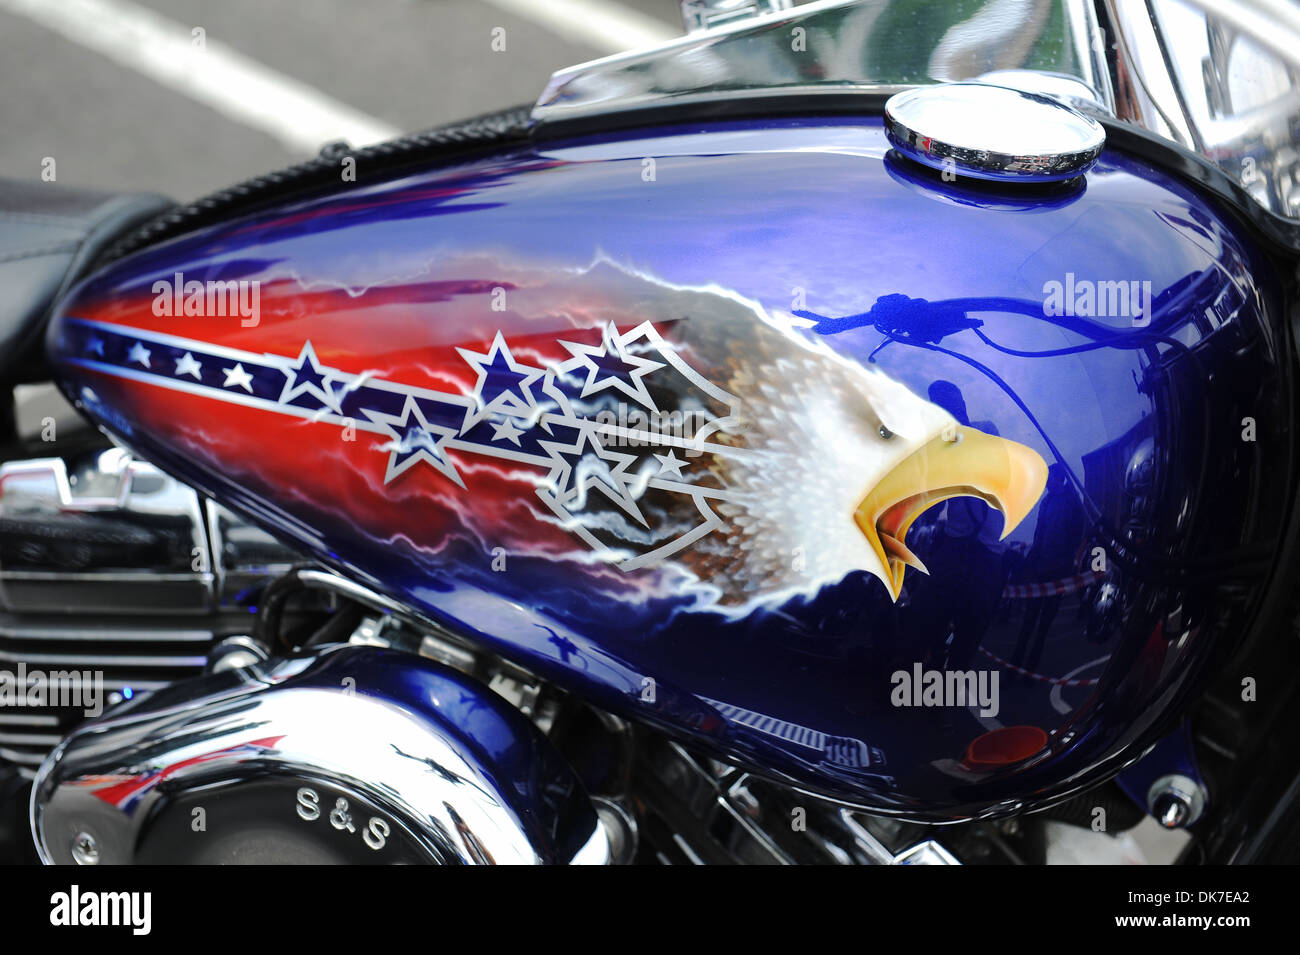 Harley Davidson Moto artwork Foto Stock